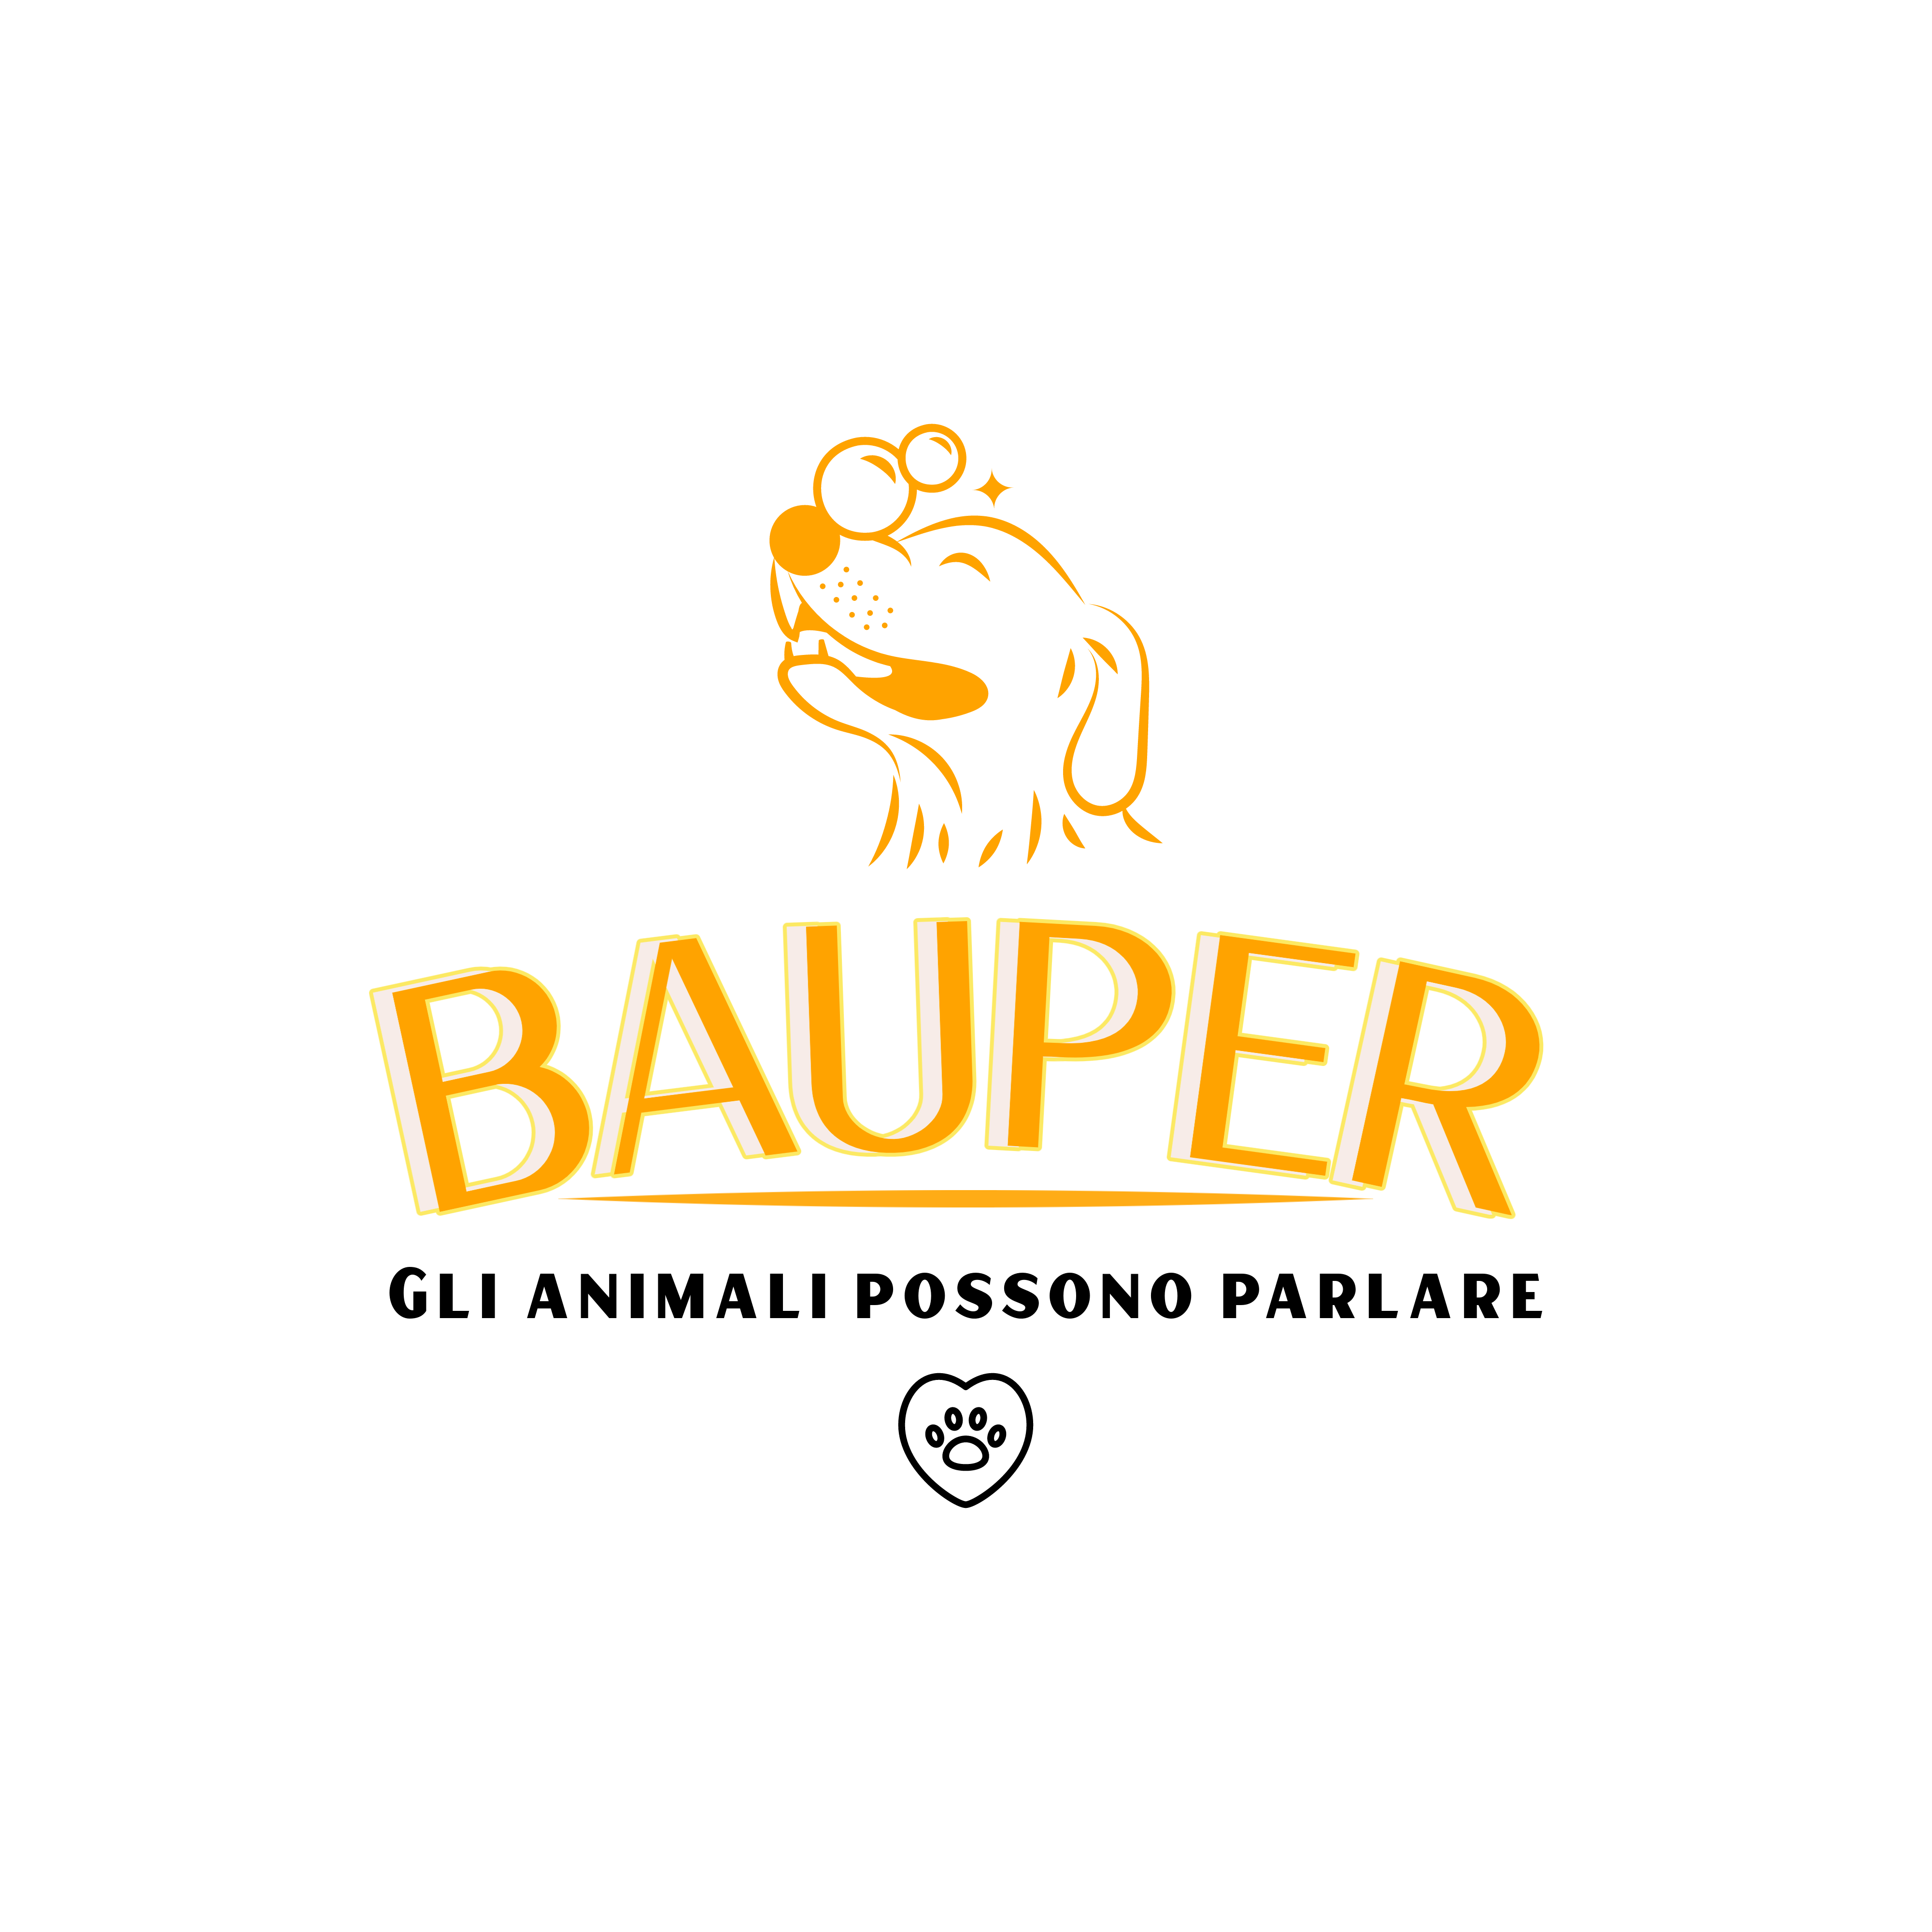 Bauper™